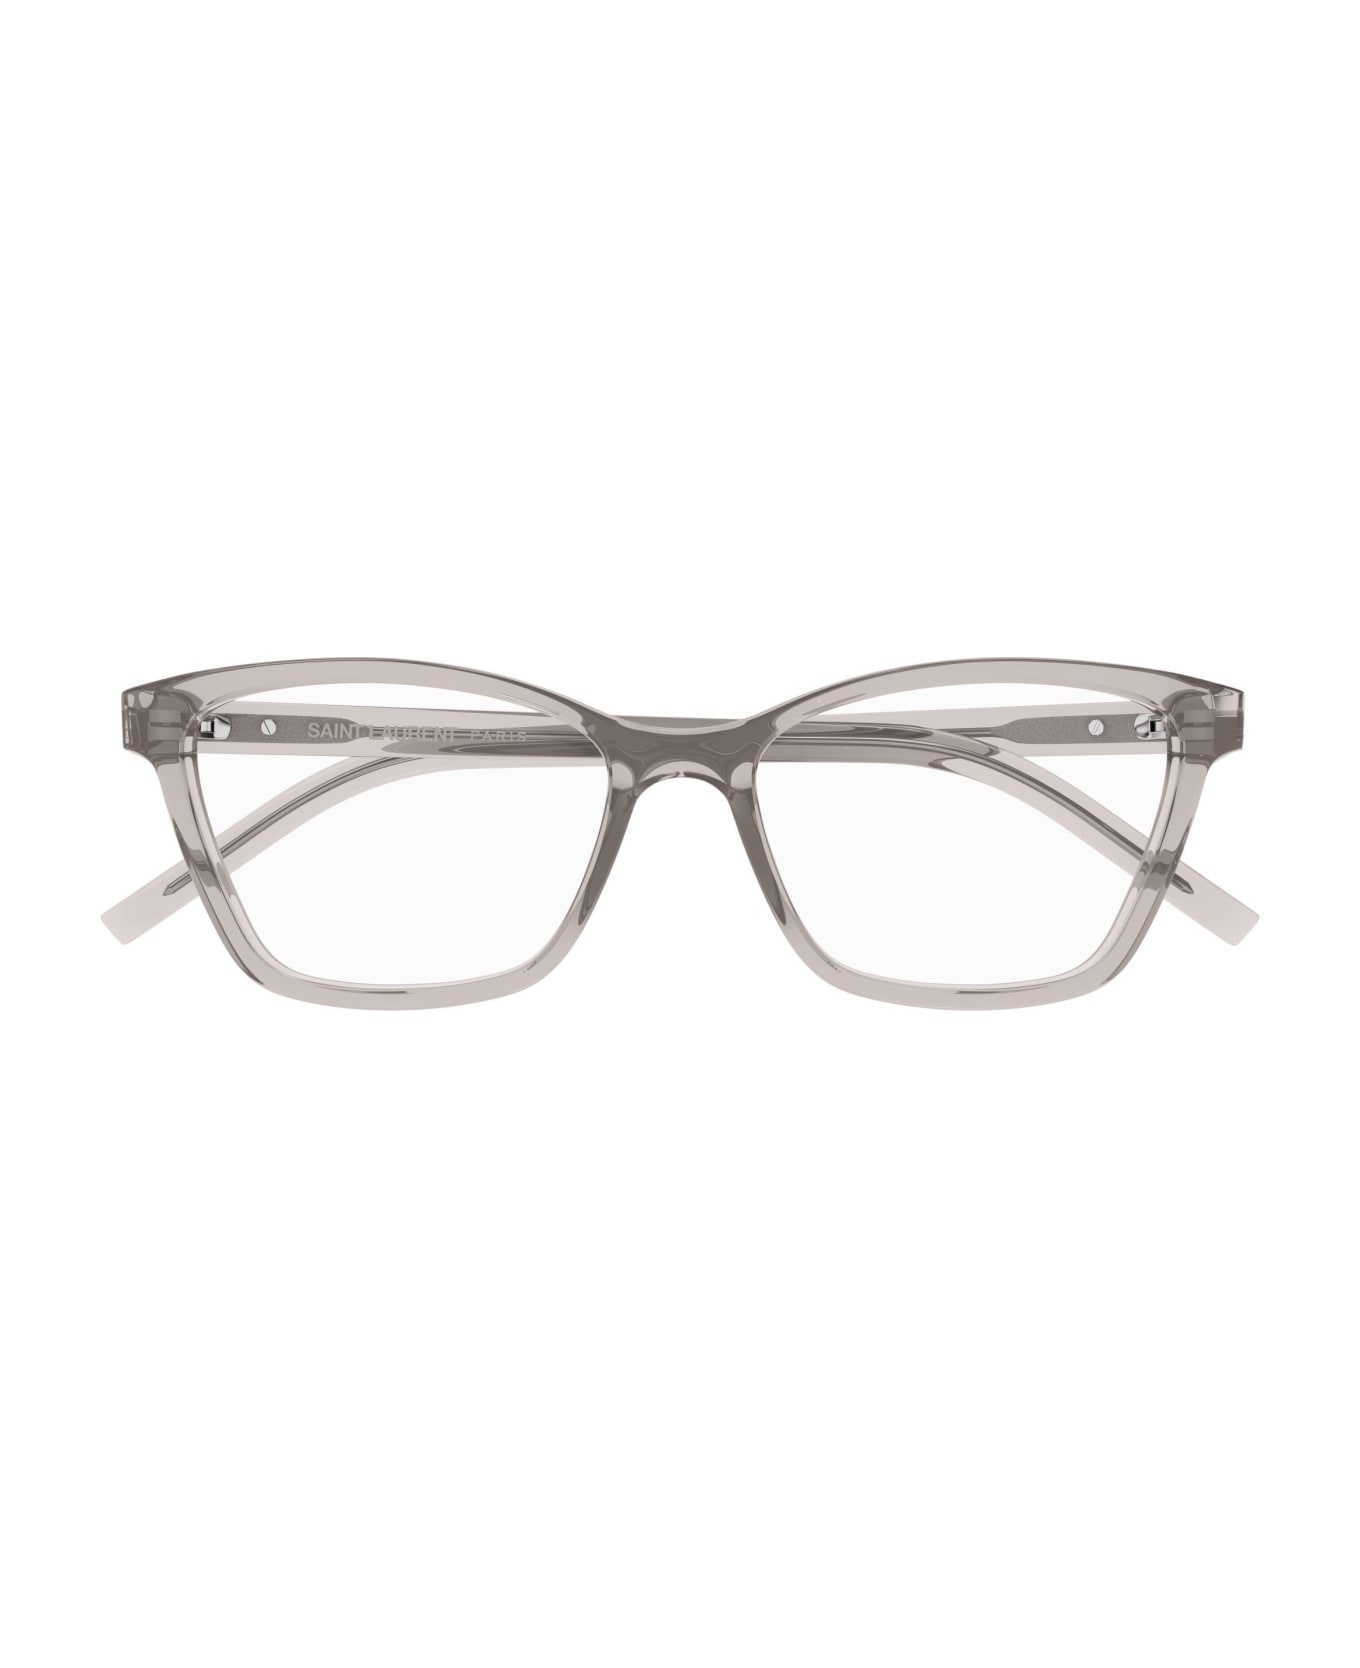 Saint Laurent Eyewear Glasses - Beige アイウェア